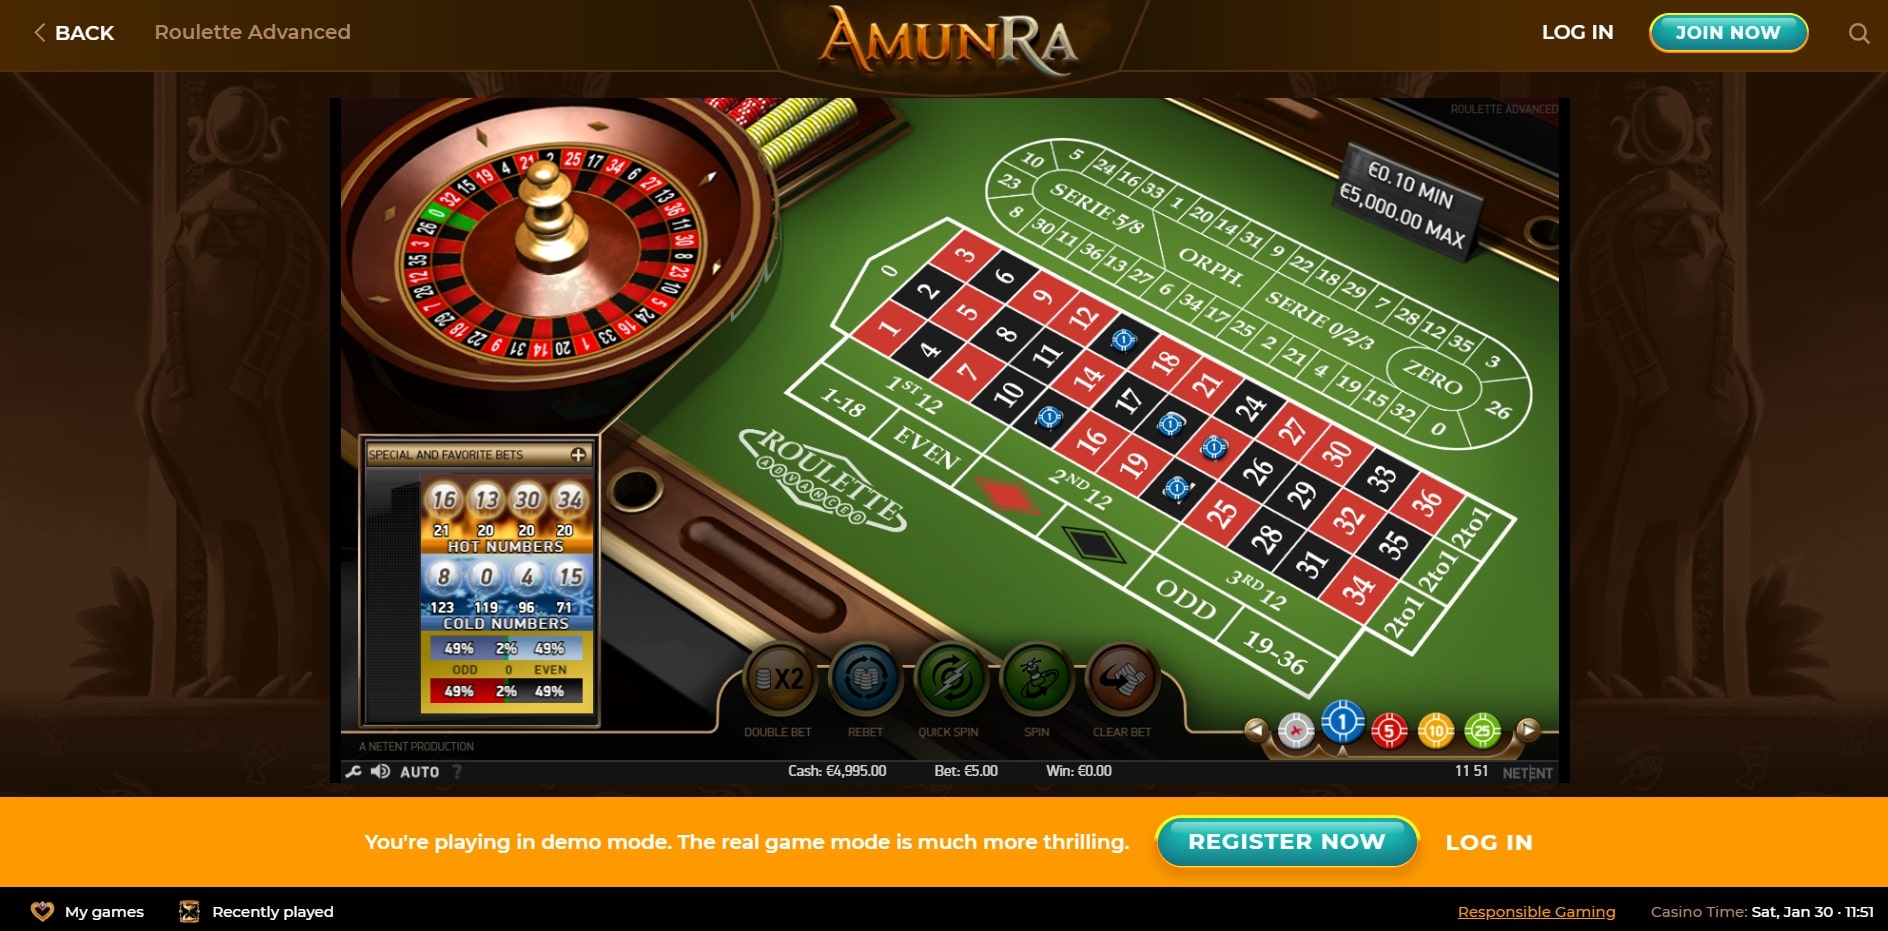 Amunra Casino Casino Games